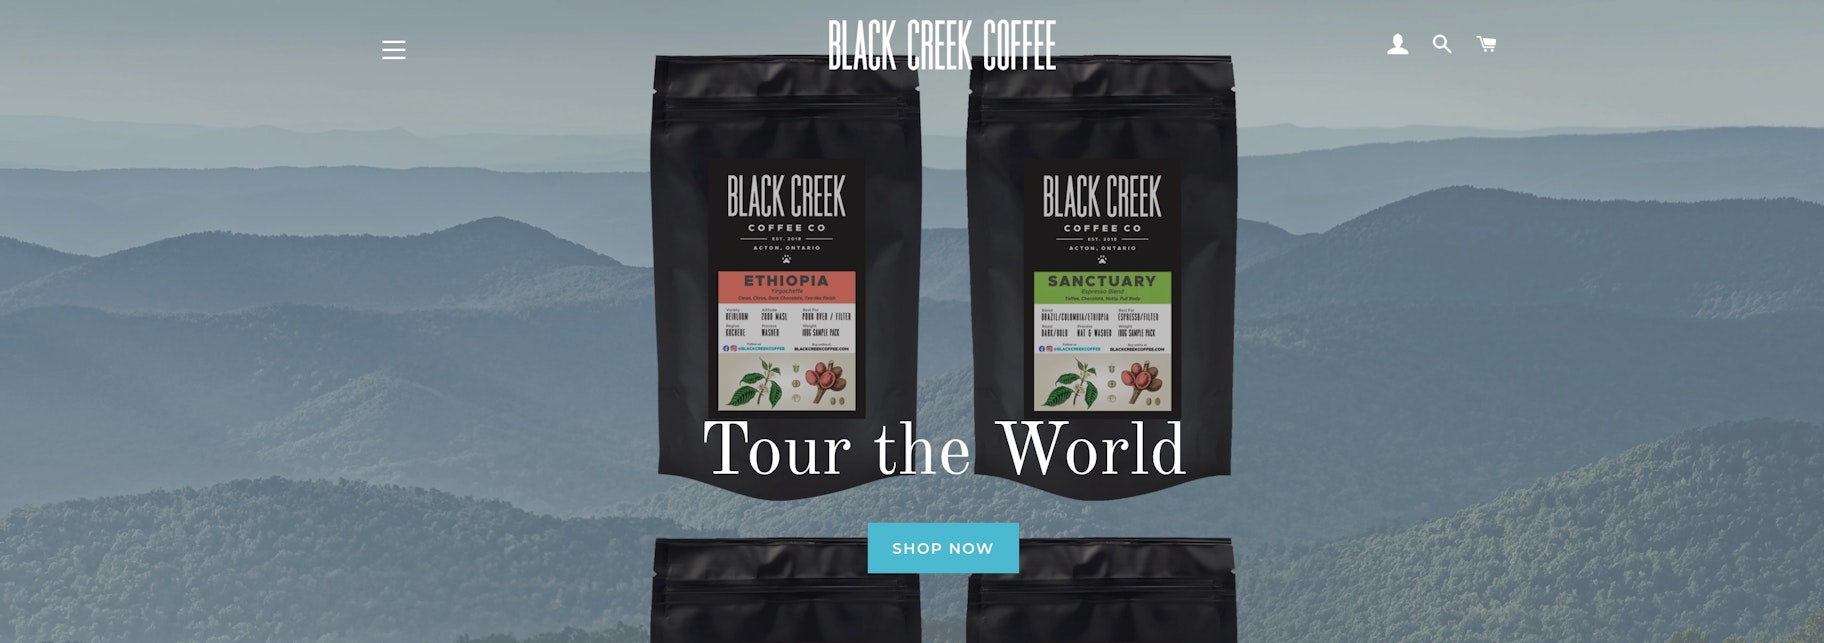 black creek coffee